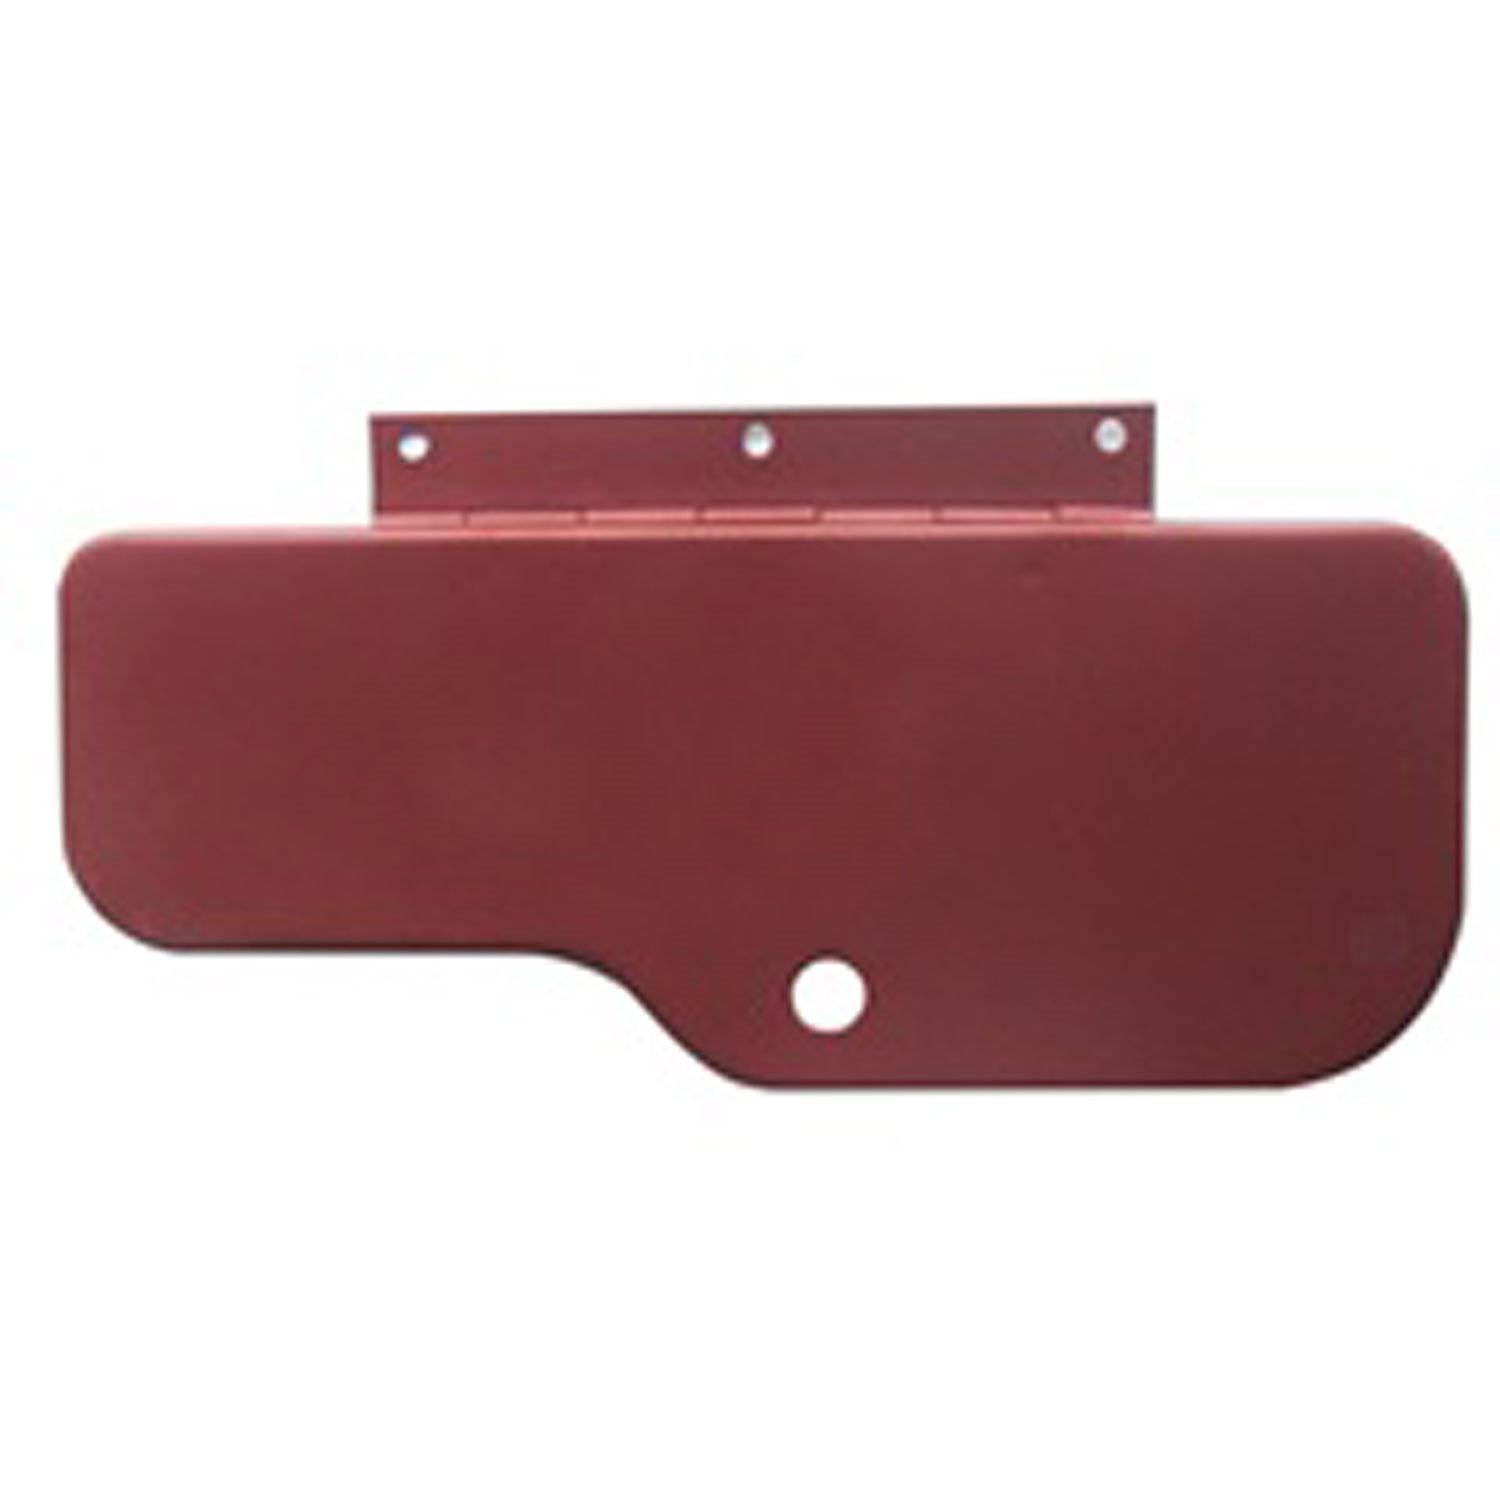 Replacement glove box door from Omix-ADA, Fits 41-45